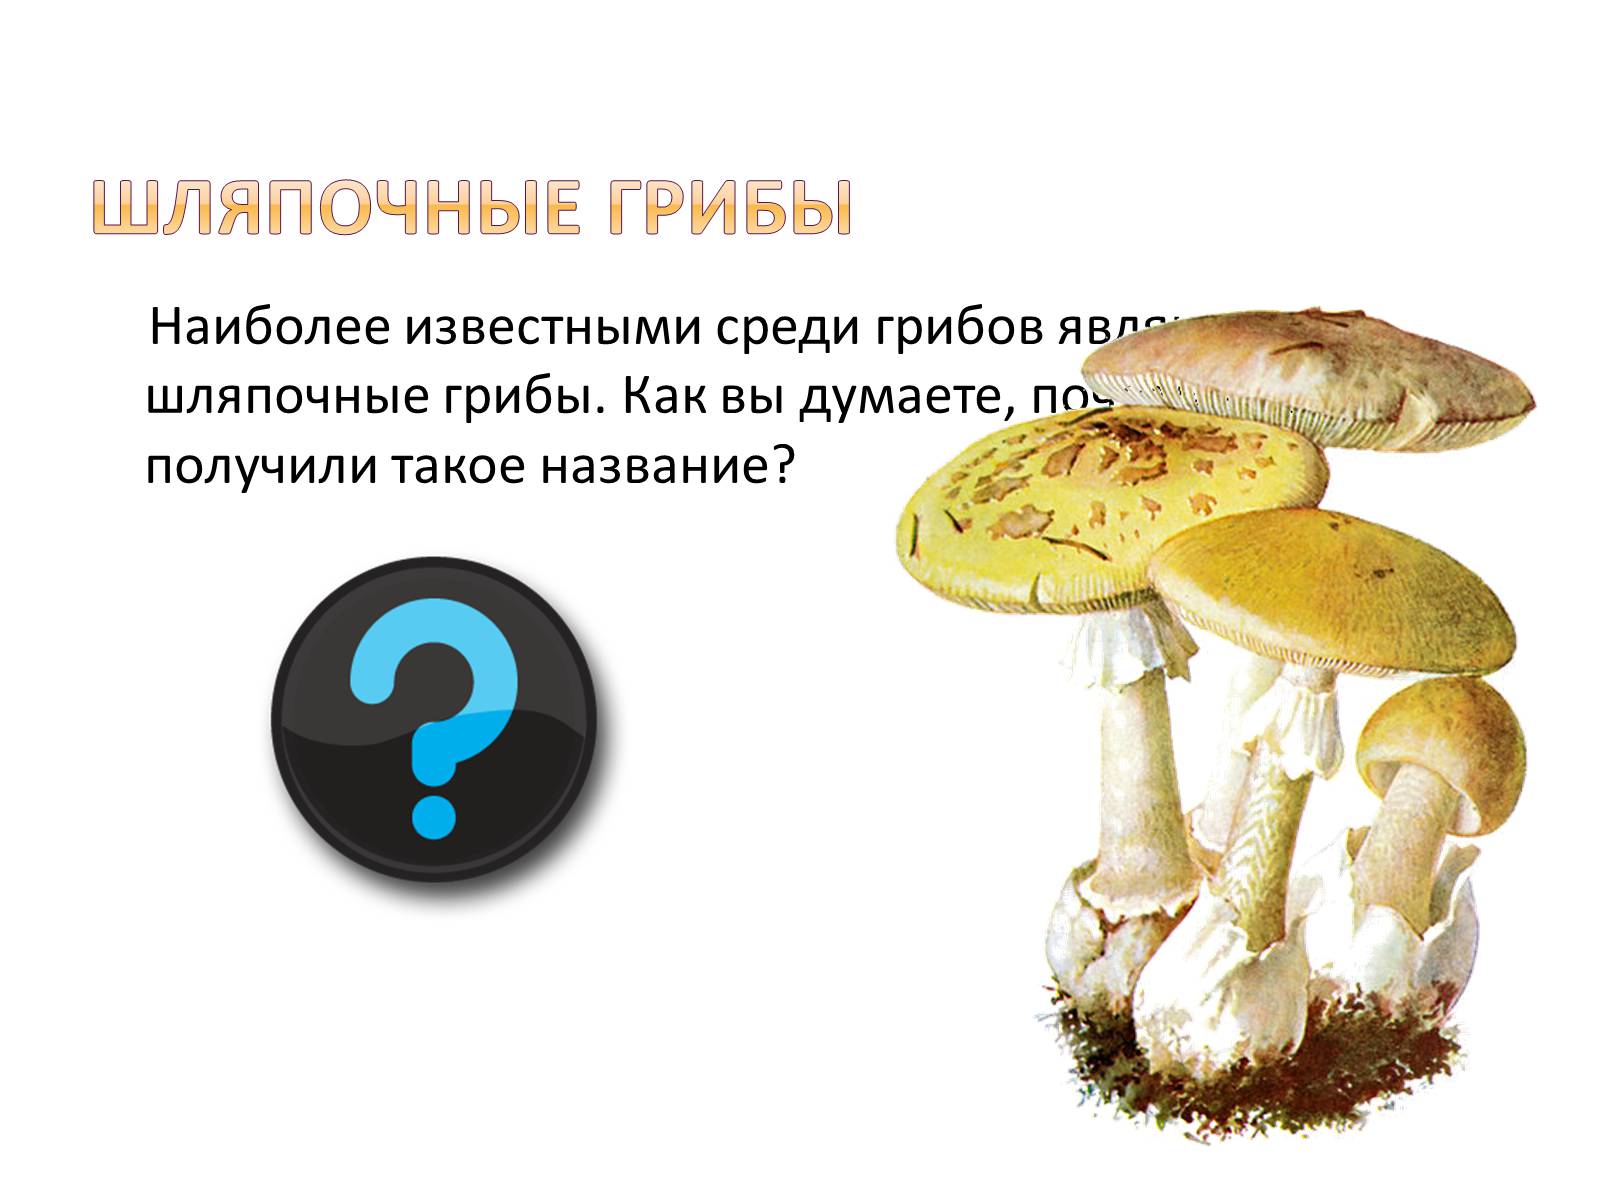 Презентація на тему «Шляпочные грибы» - Слайд #3